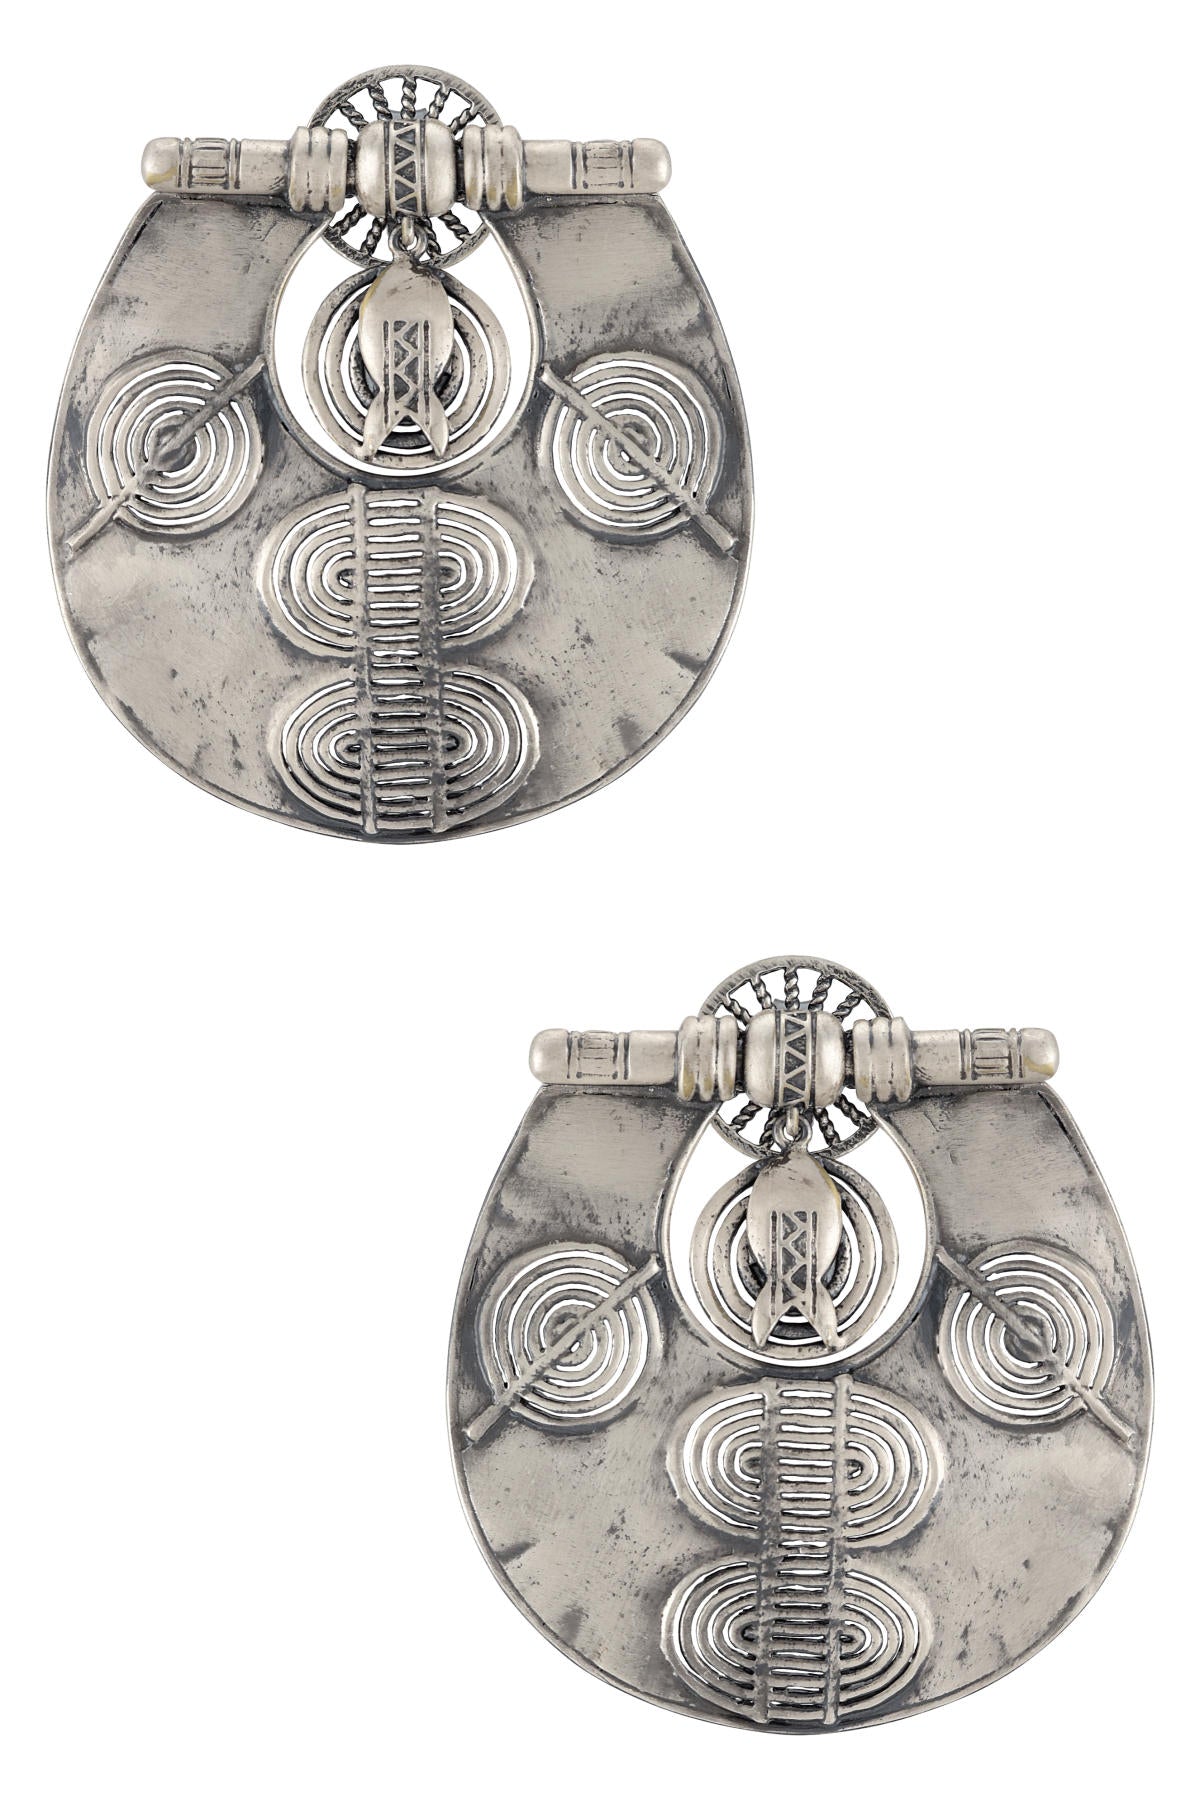 Silver Plated Matsya Amulet Earrings